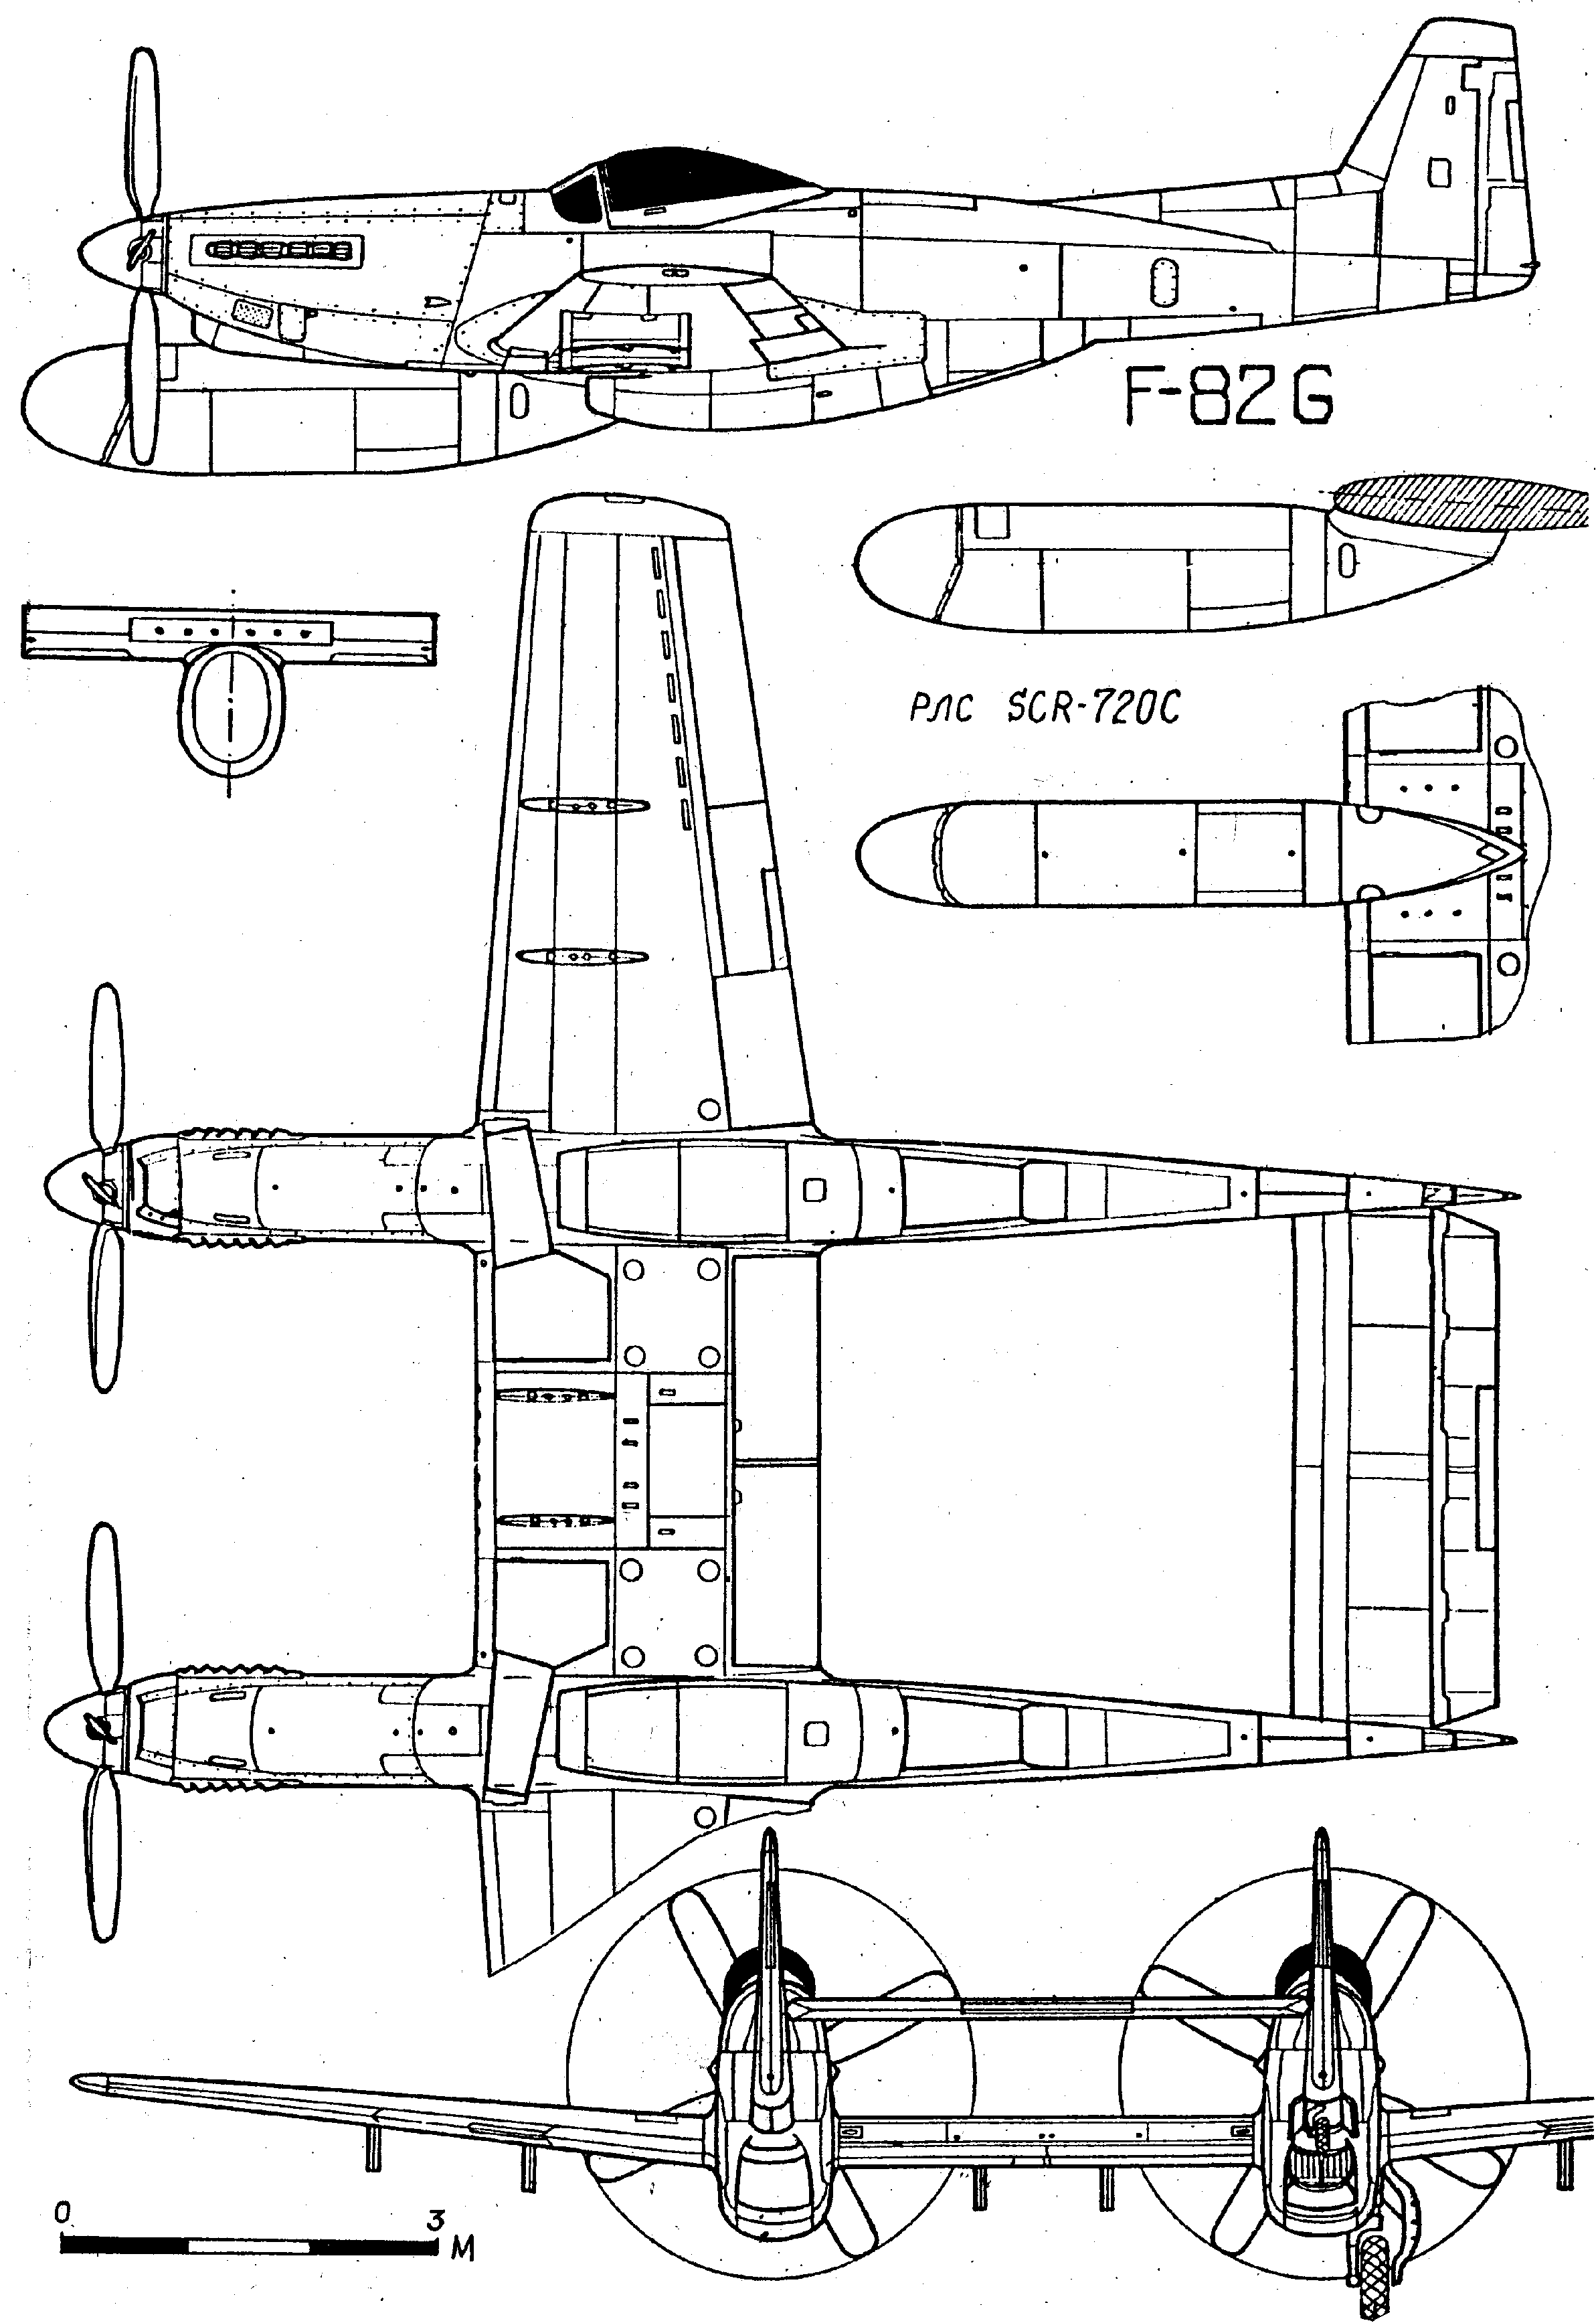 F-82 Twin Mustang blueprint